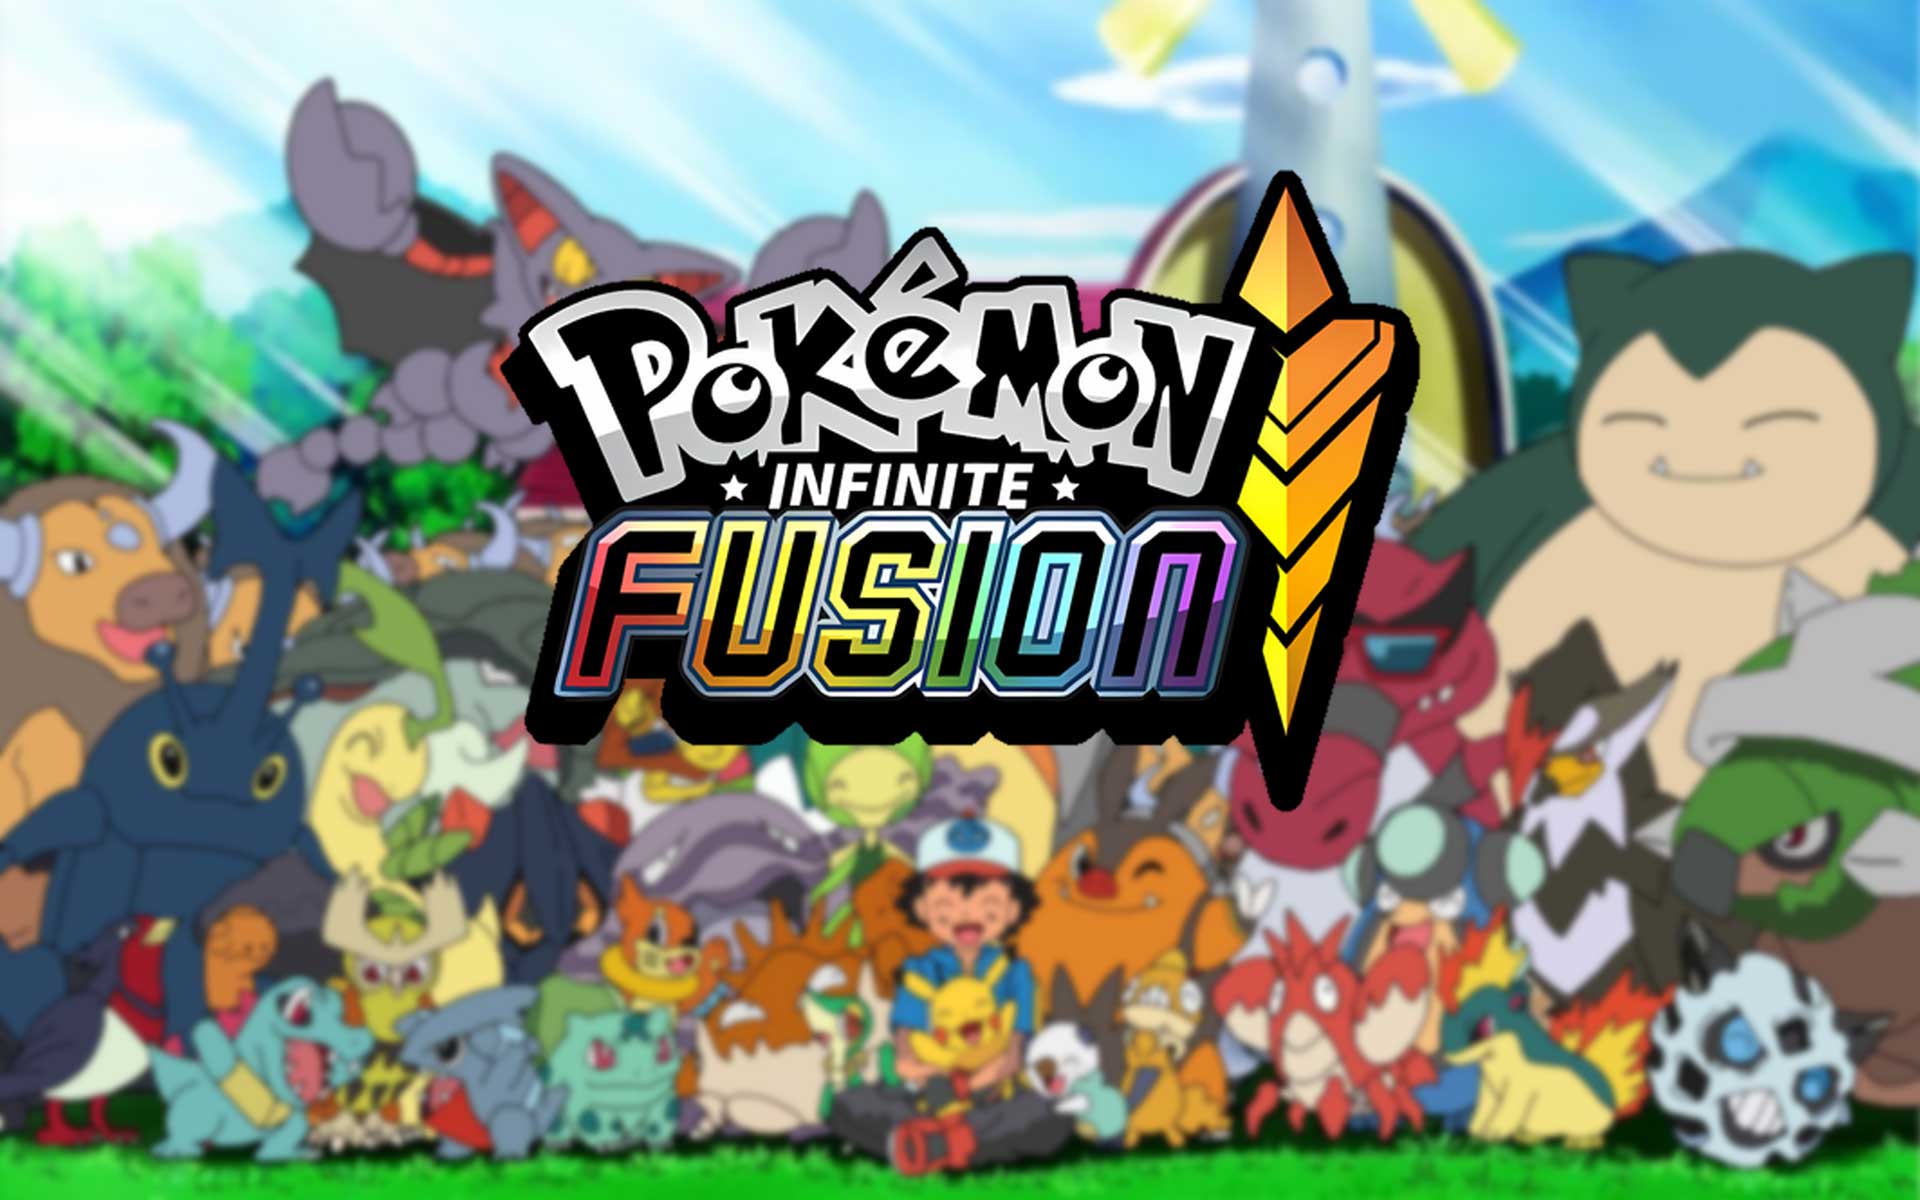 Pokemon Fusion Tentaking, Pokéfusion / Pokémon Fusion